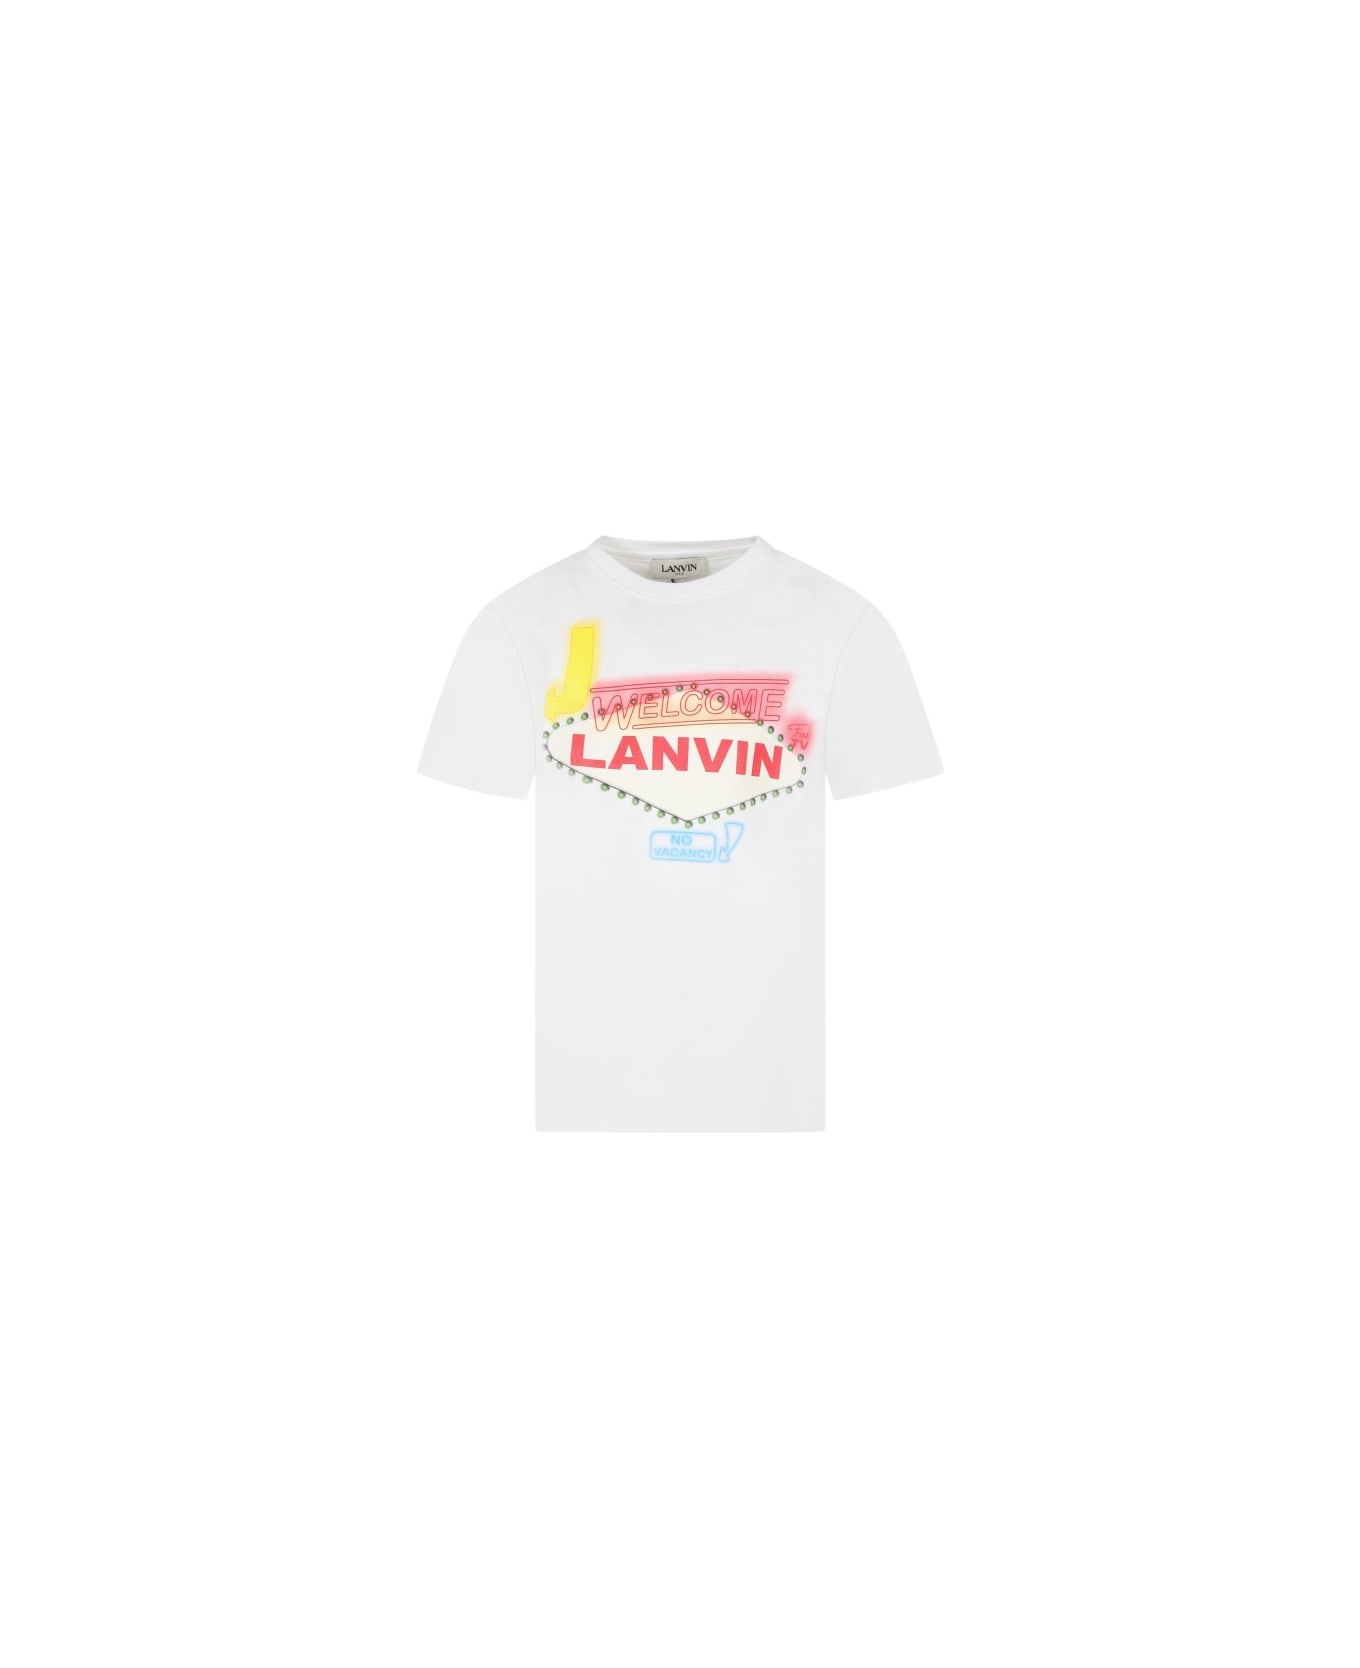 Lanvin White T-shirt With Print - White